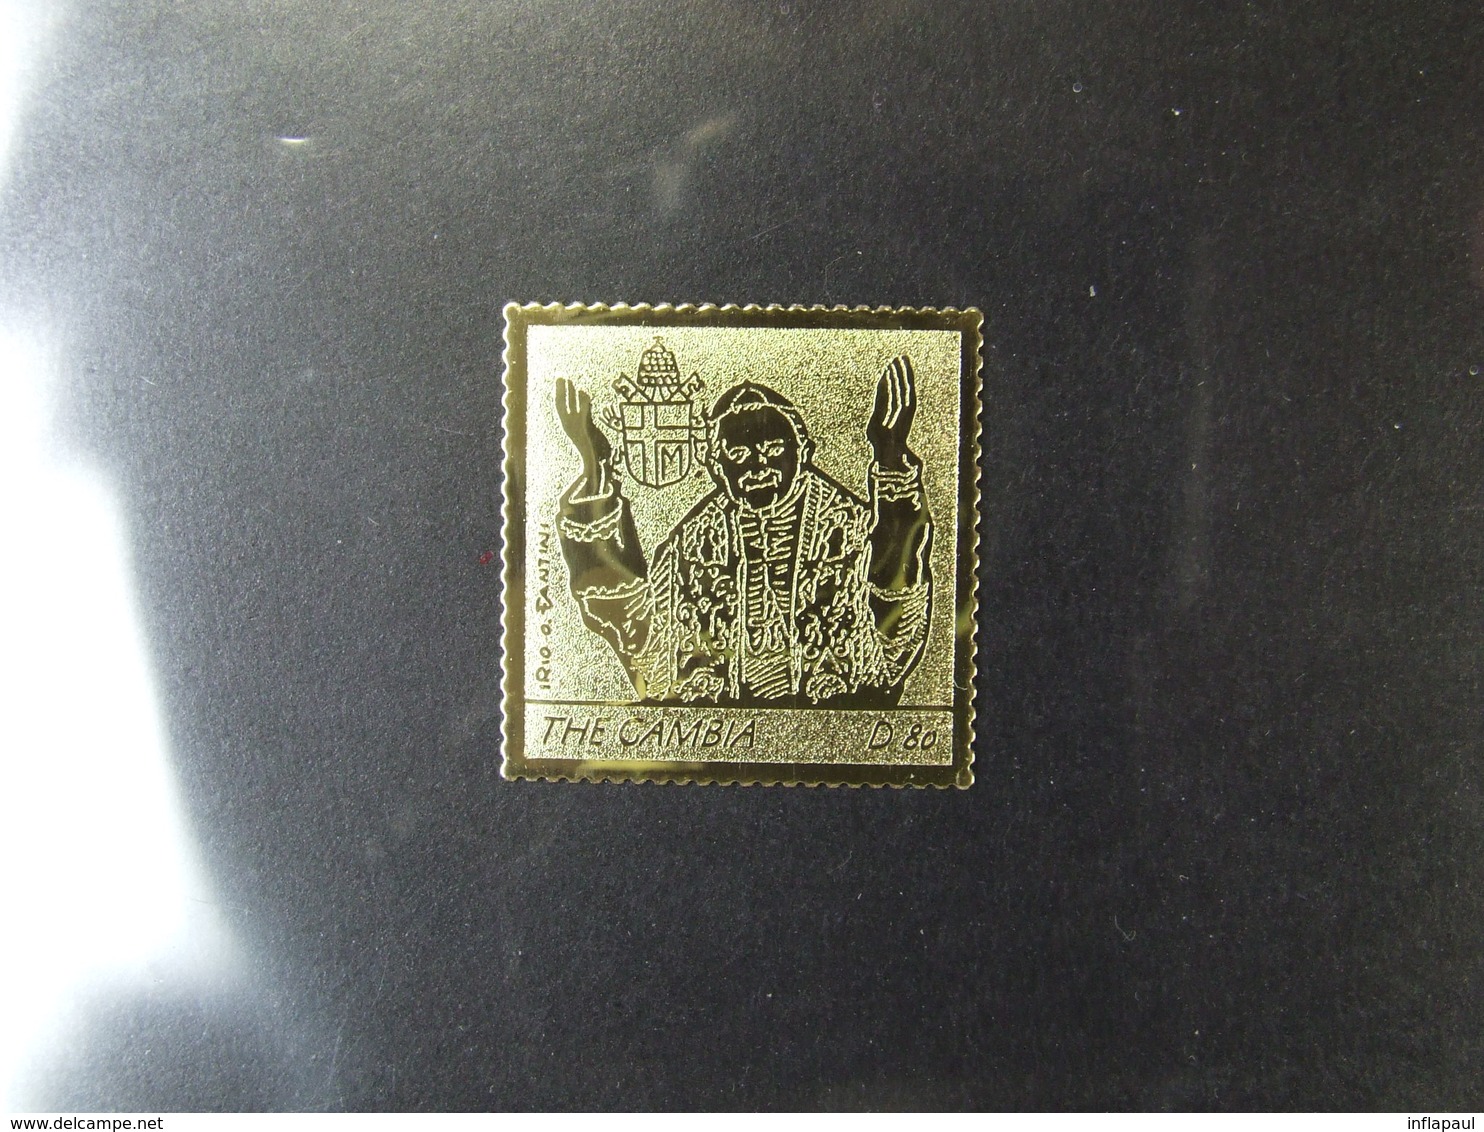 Gambia - 5548-74 Papst Silber und Goldbriefmarken komplett ** MNH Michelwert 180,00 € (6676)